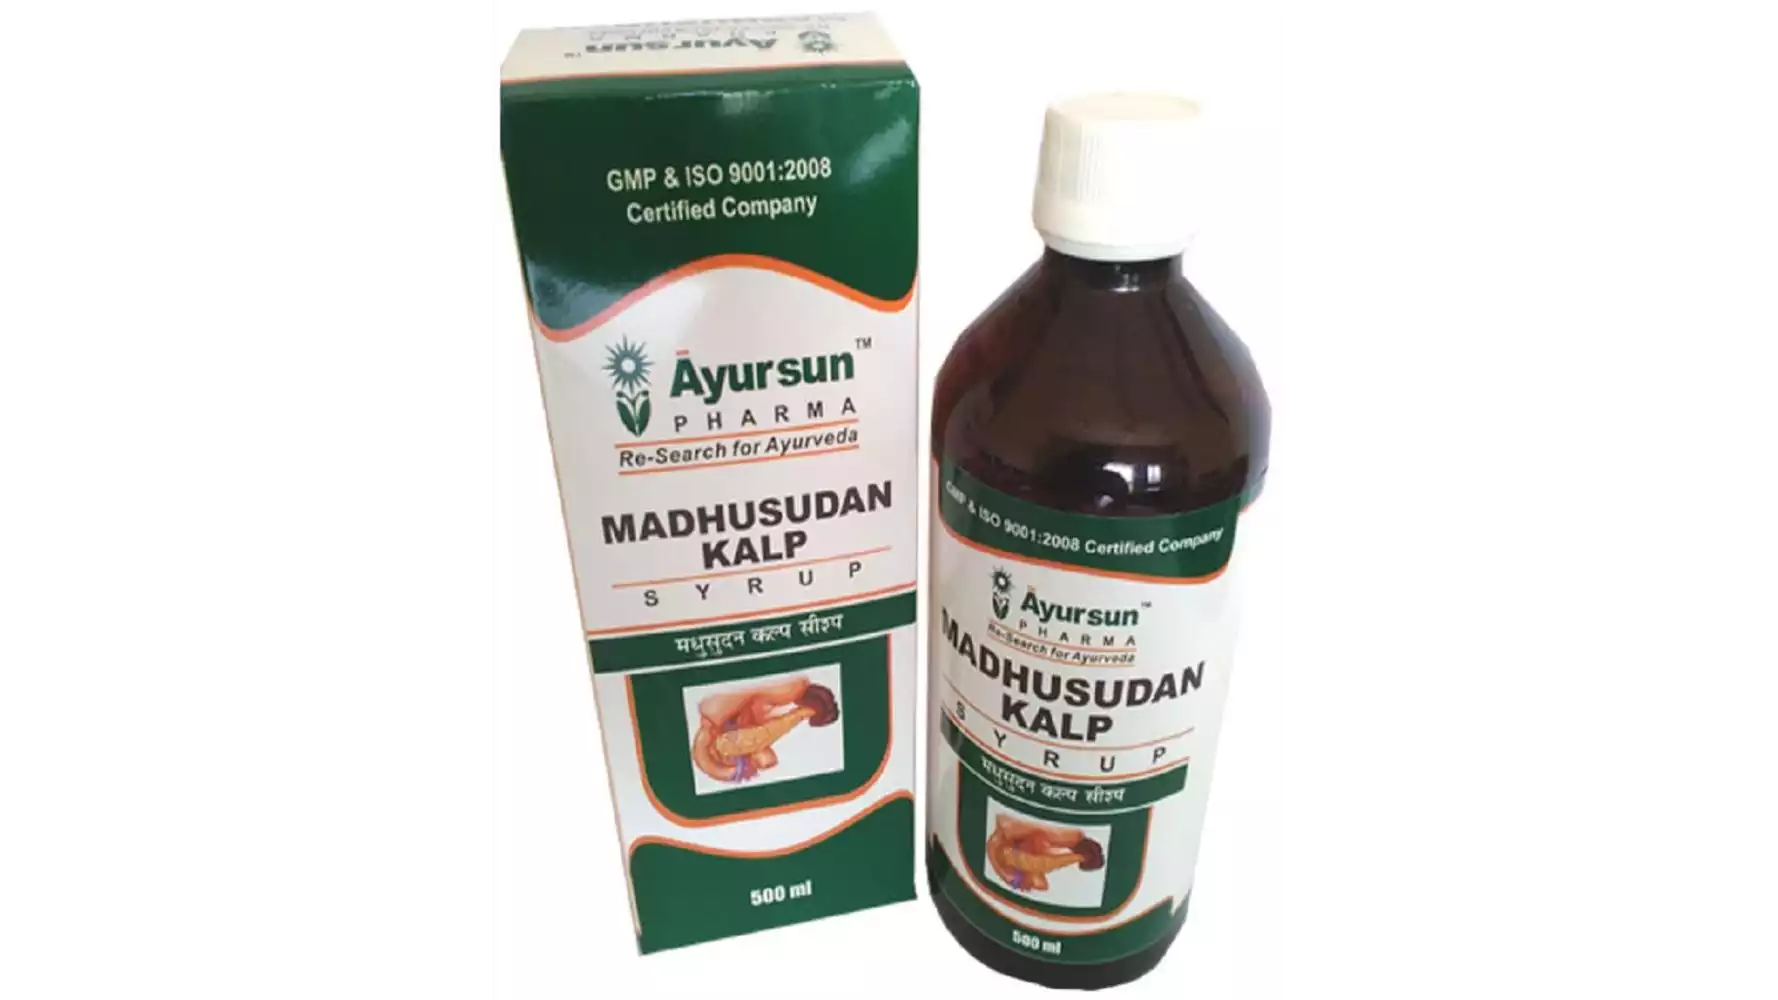 Ayursun Pharma Madhusudan Kalp Syrup (500ml)